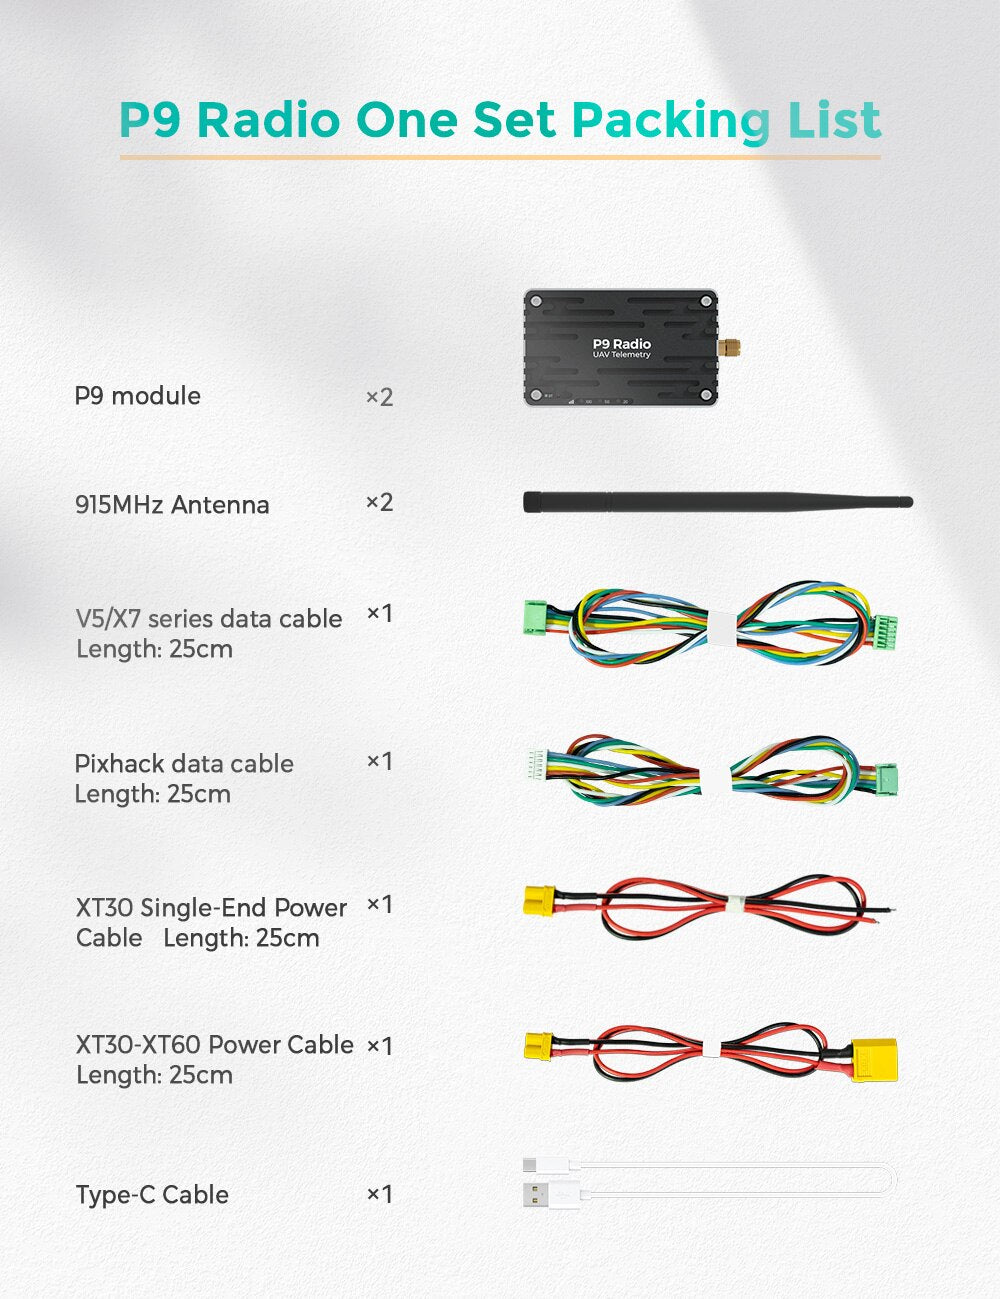 CUAV RC FPV Data Transmission, XT3O-XT6O Power Cable x1 Length: